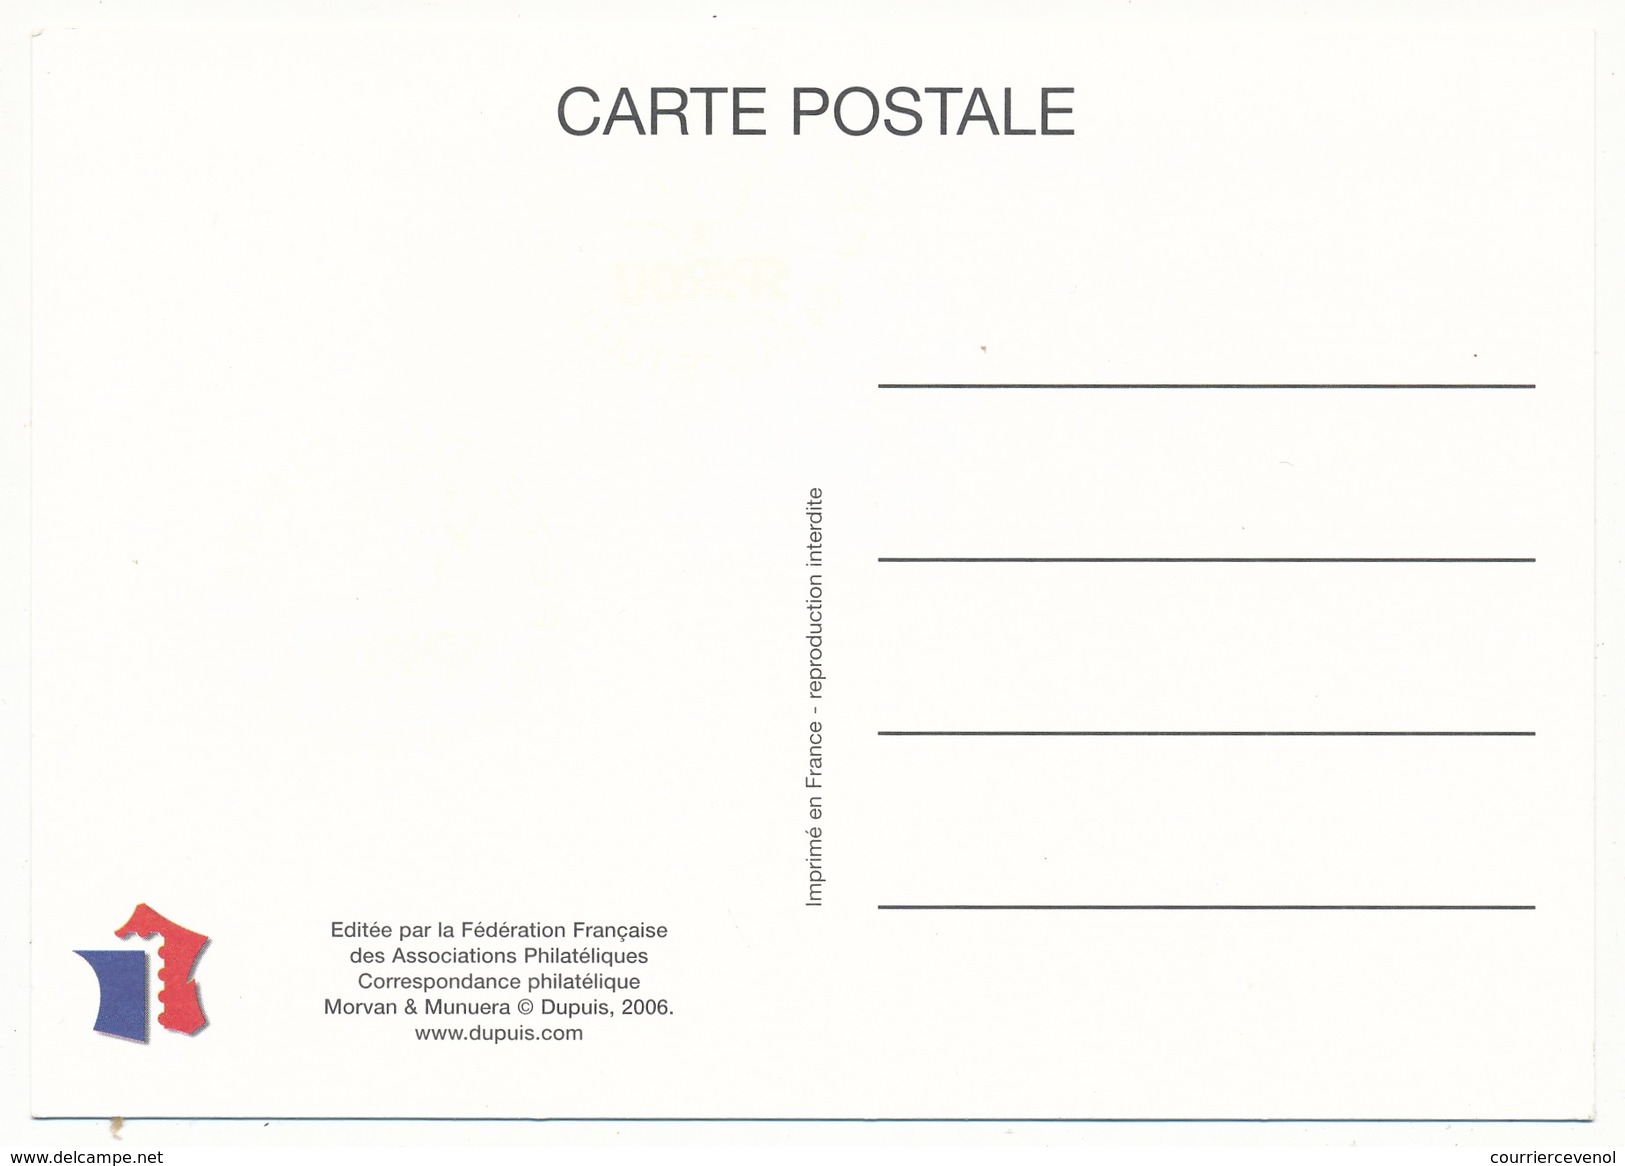 FRANCE - Carte Fête Du Timbre 2006 - 04 Sainte-TULLE - Timbre Spirou - Stamp's Day